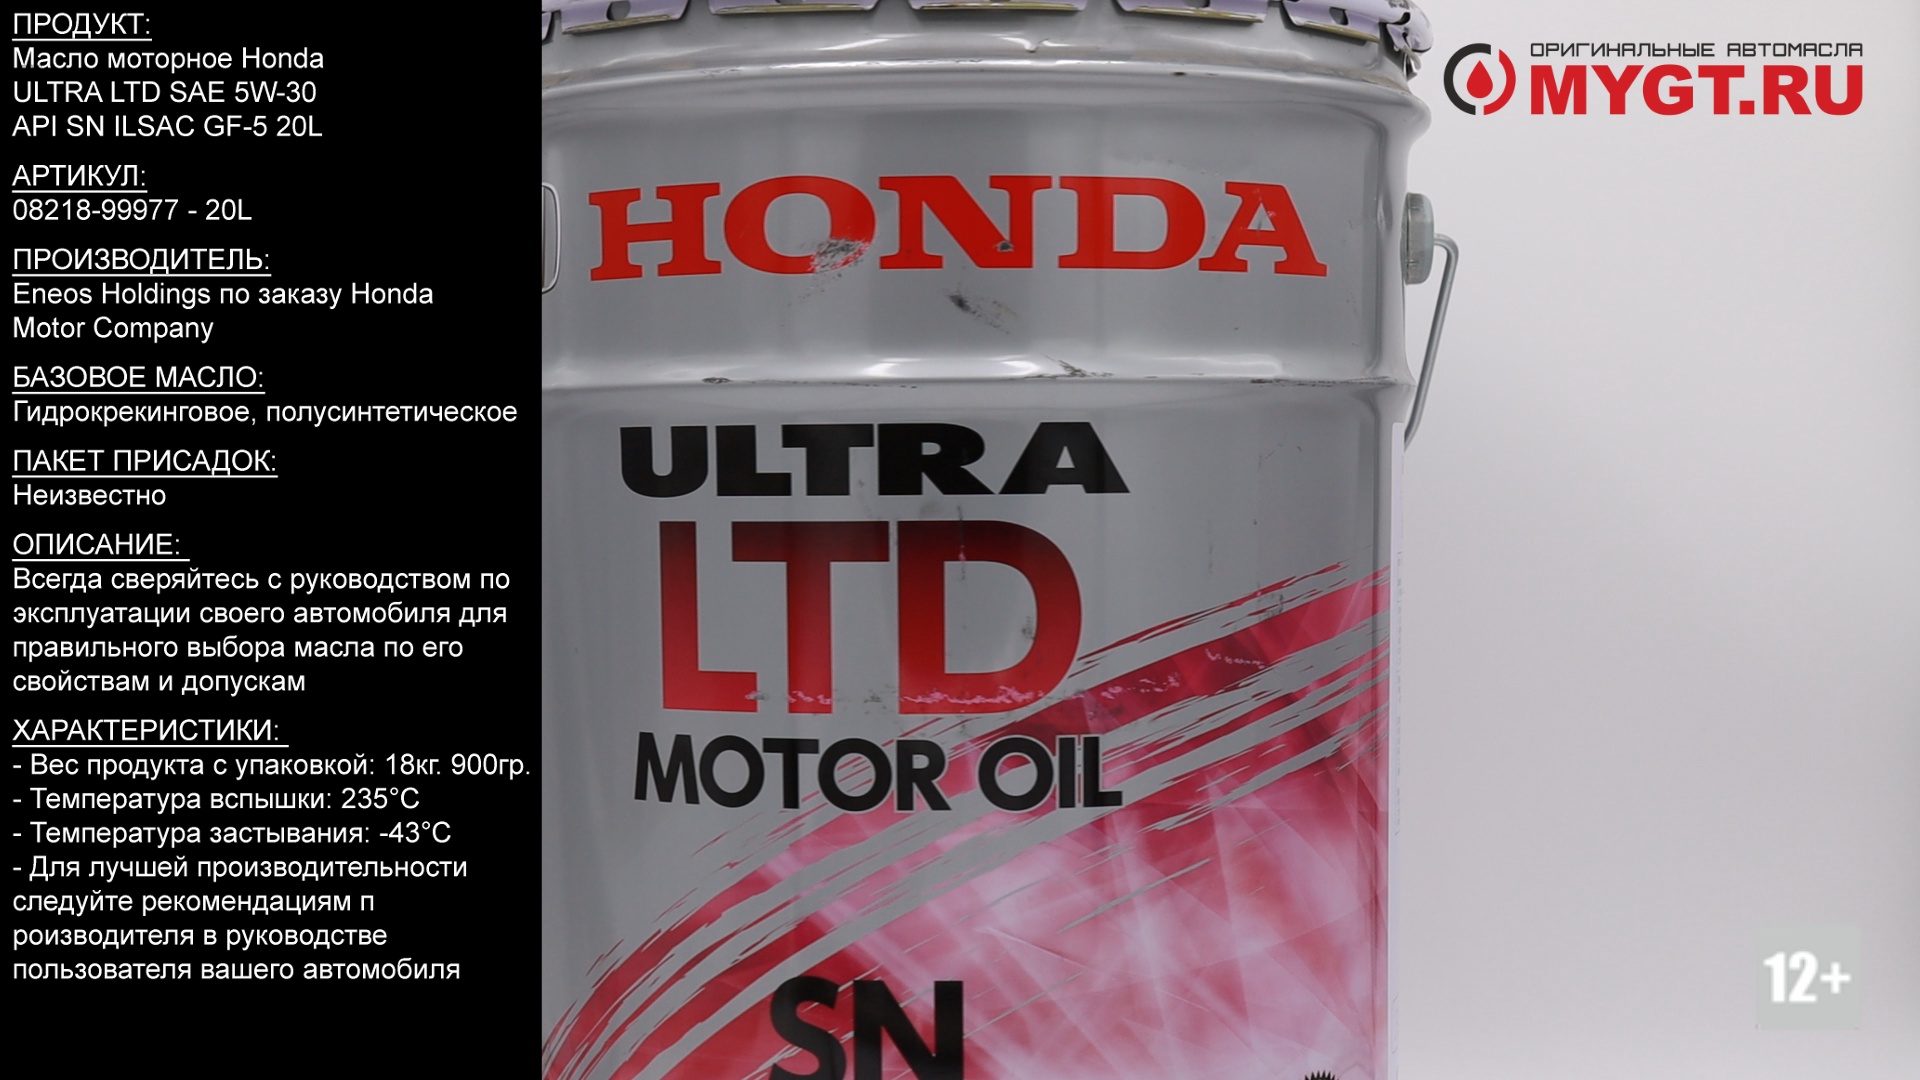 Honda Ultra Ltd 5w30 SN. Honda Ultra Leo Motor Oil SN 5w-30 ILSAC gf-5. Honda Ultra Ltd SM 5w-30. Honda Ultra Ltd SAE 5w-30.